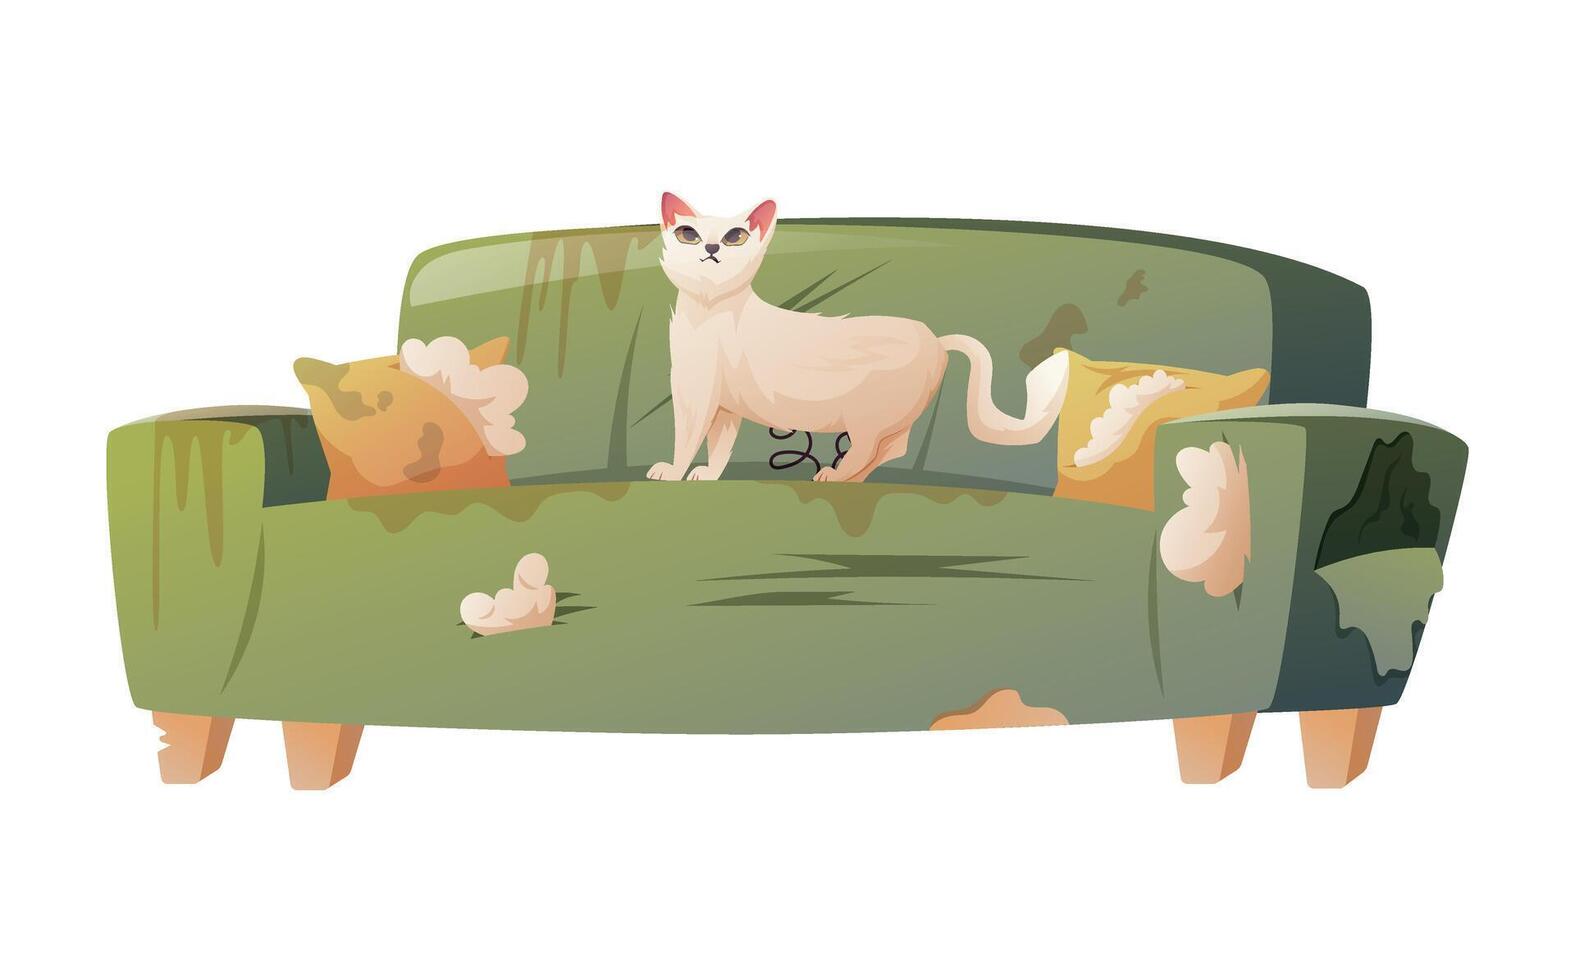 roto, sucio hogar sofá, rayado por un blanco gato. mascota dañado mueble para vivo habitación interior. vector aislado dibujos animados ilustración.